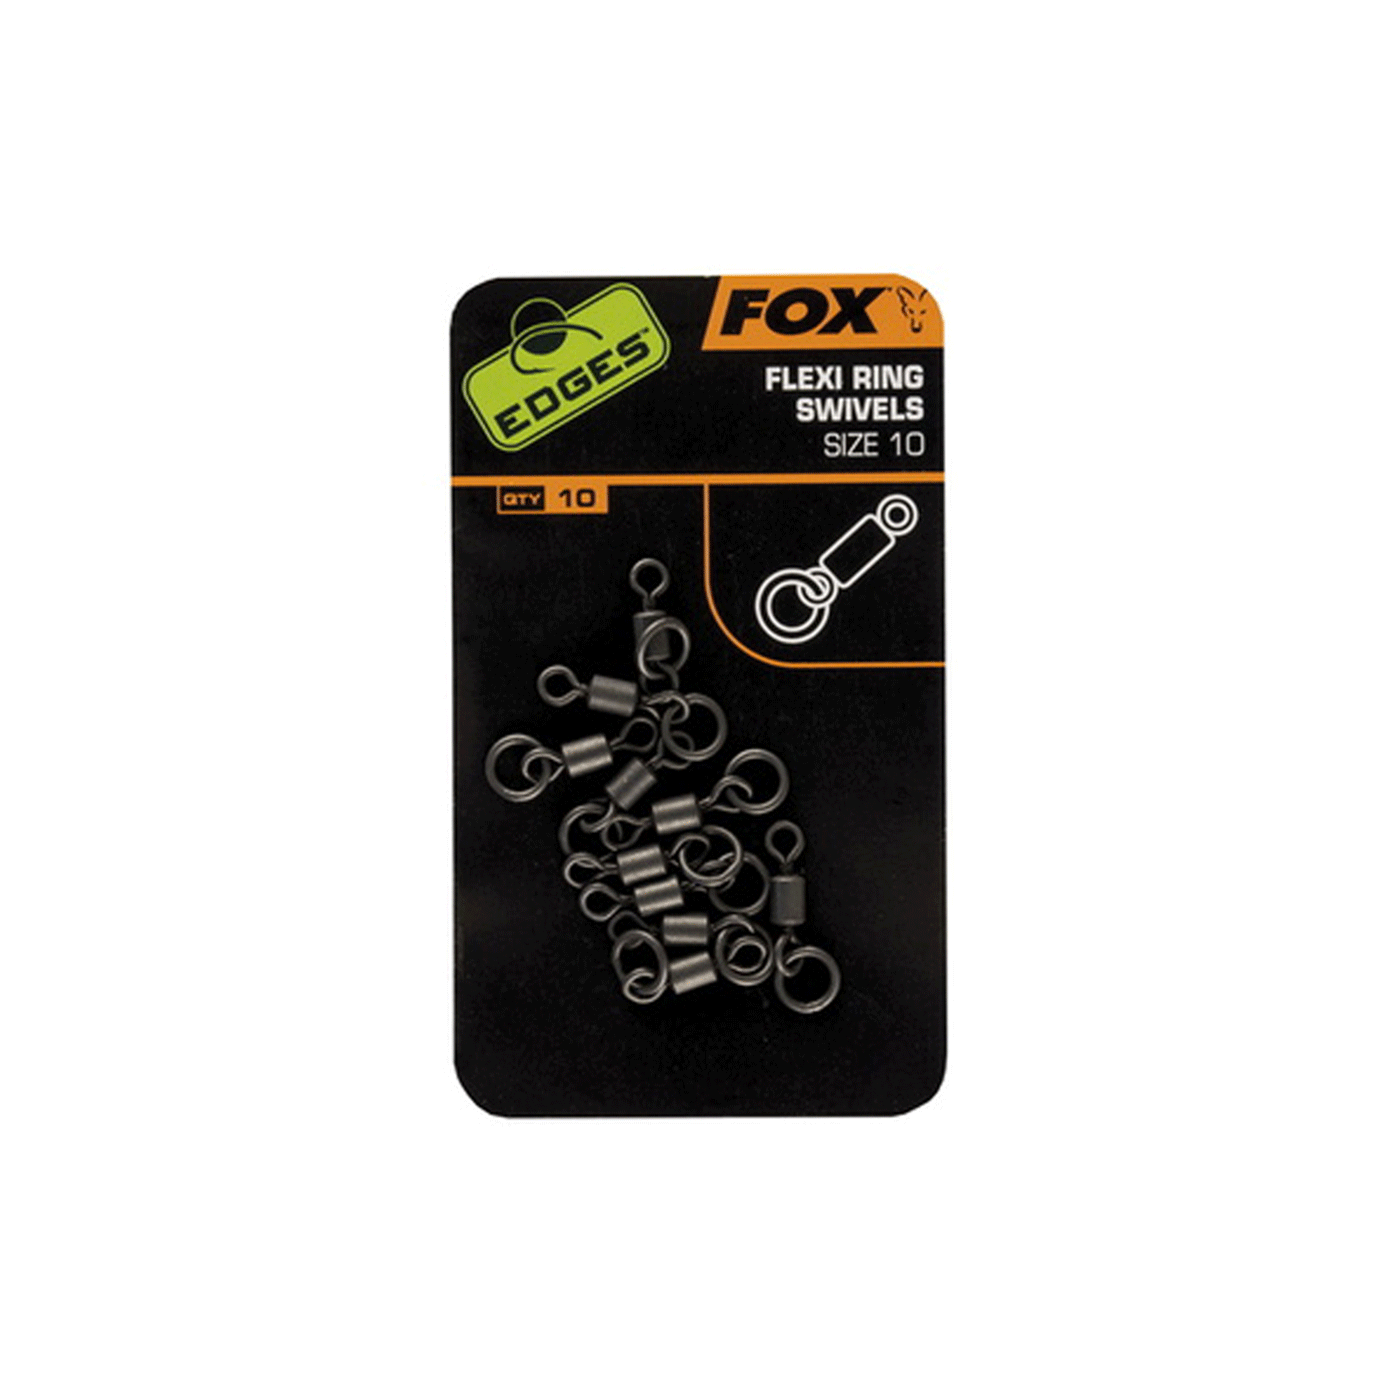 FOX - EDGES™ FLEXI RING SWIVELS SIZE 7 (10PZ)